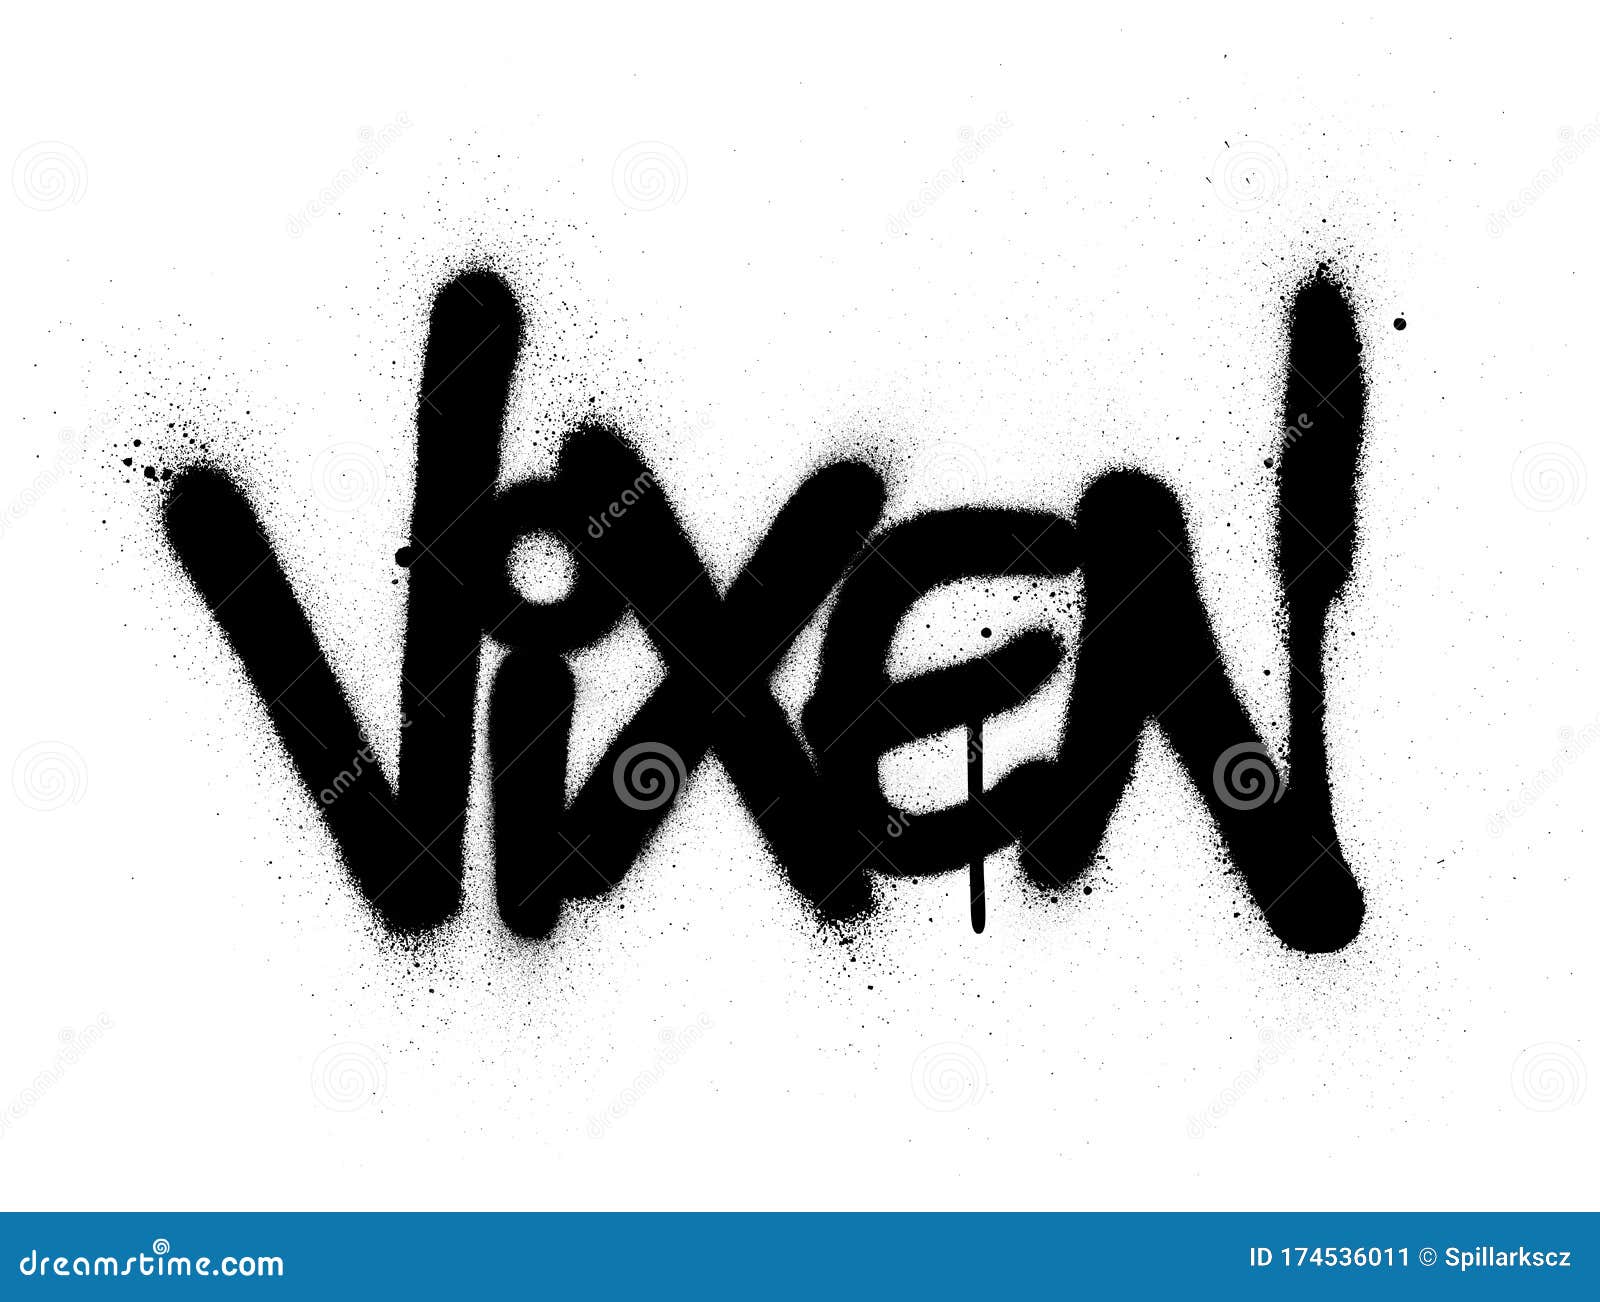 graffiti vixen word sprayed in black over white